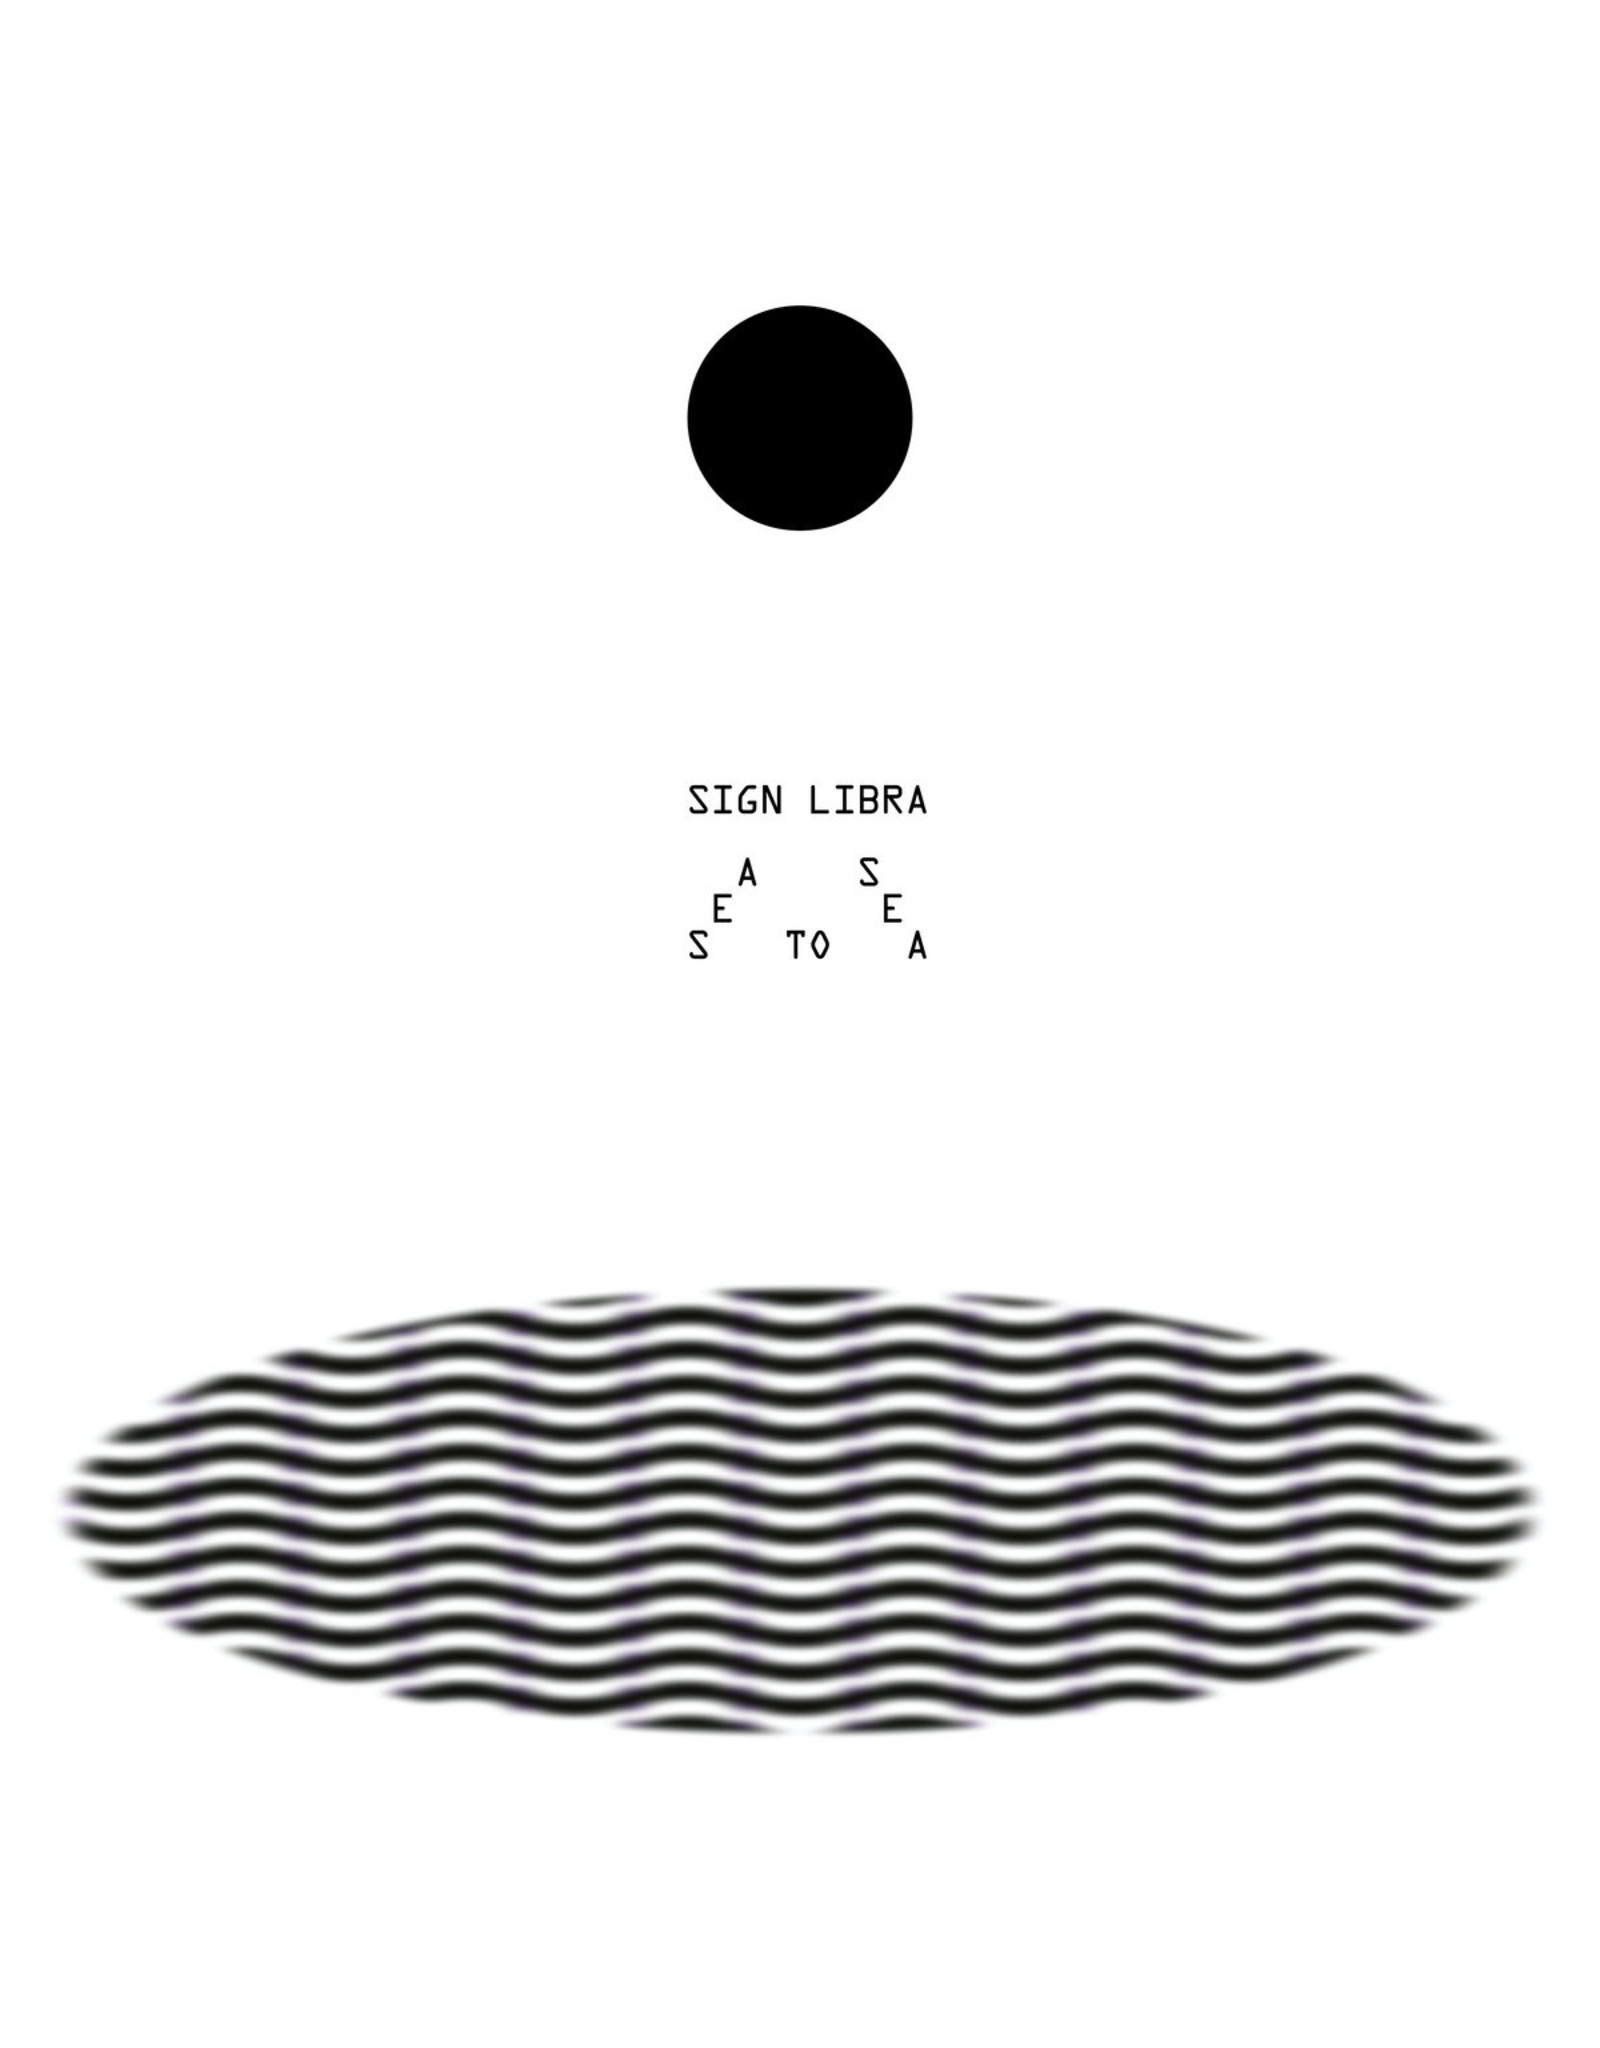 New Vinyl Sign Libra - Sea To Sea LP